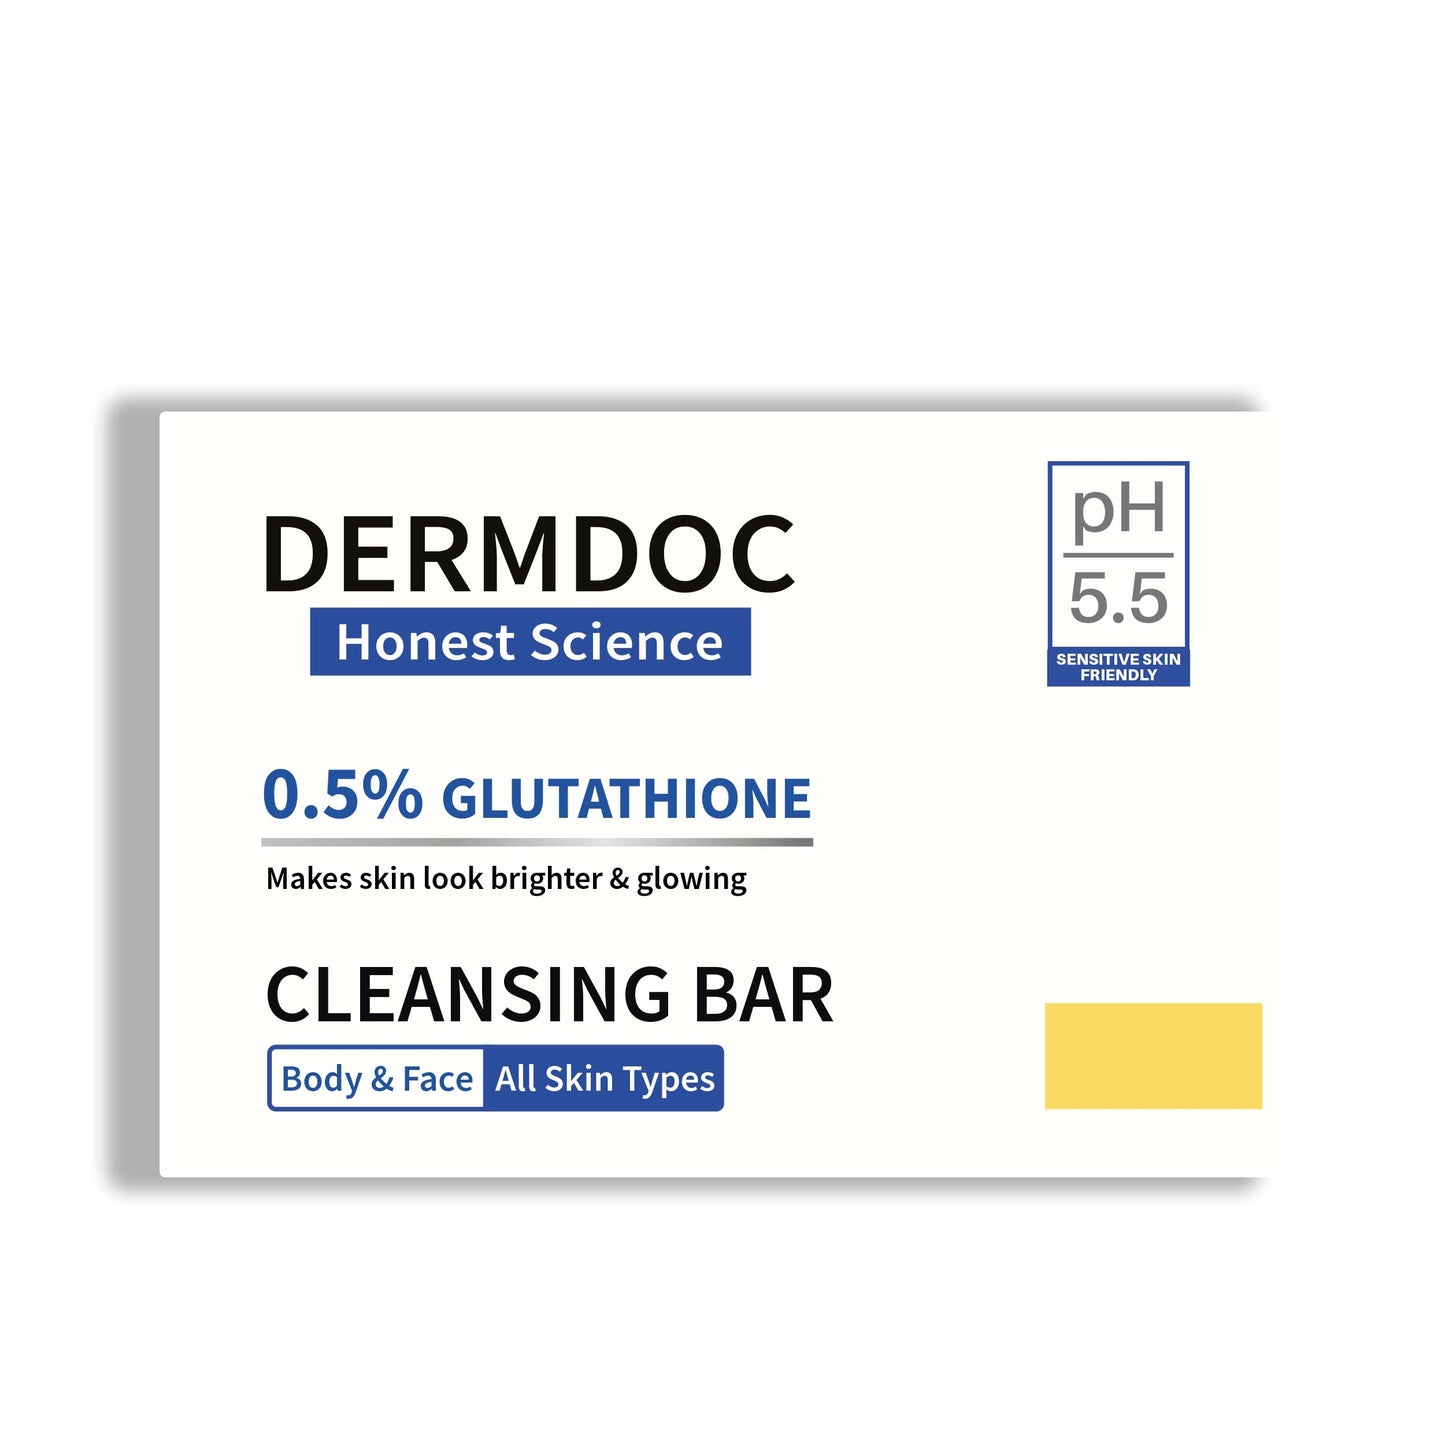 DermDoc 0.5% Glutathione Cleansing Bar For Skin Brightening (75 g)